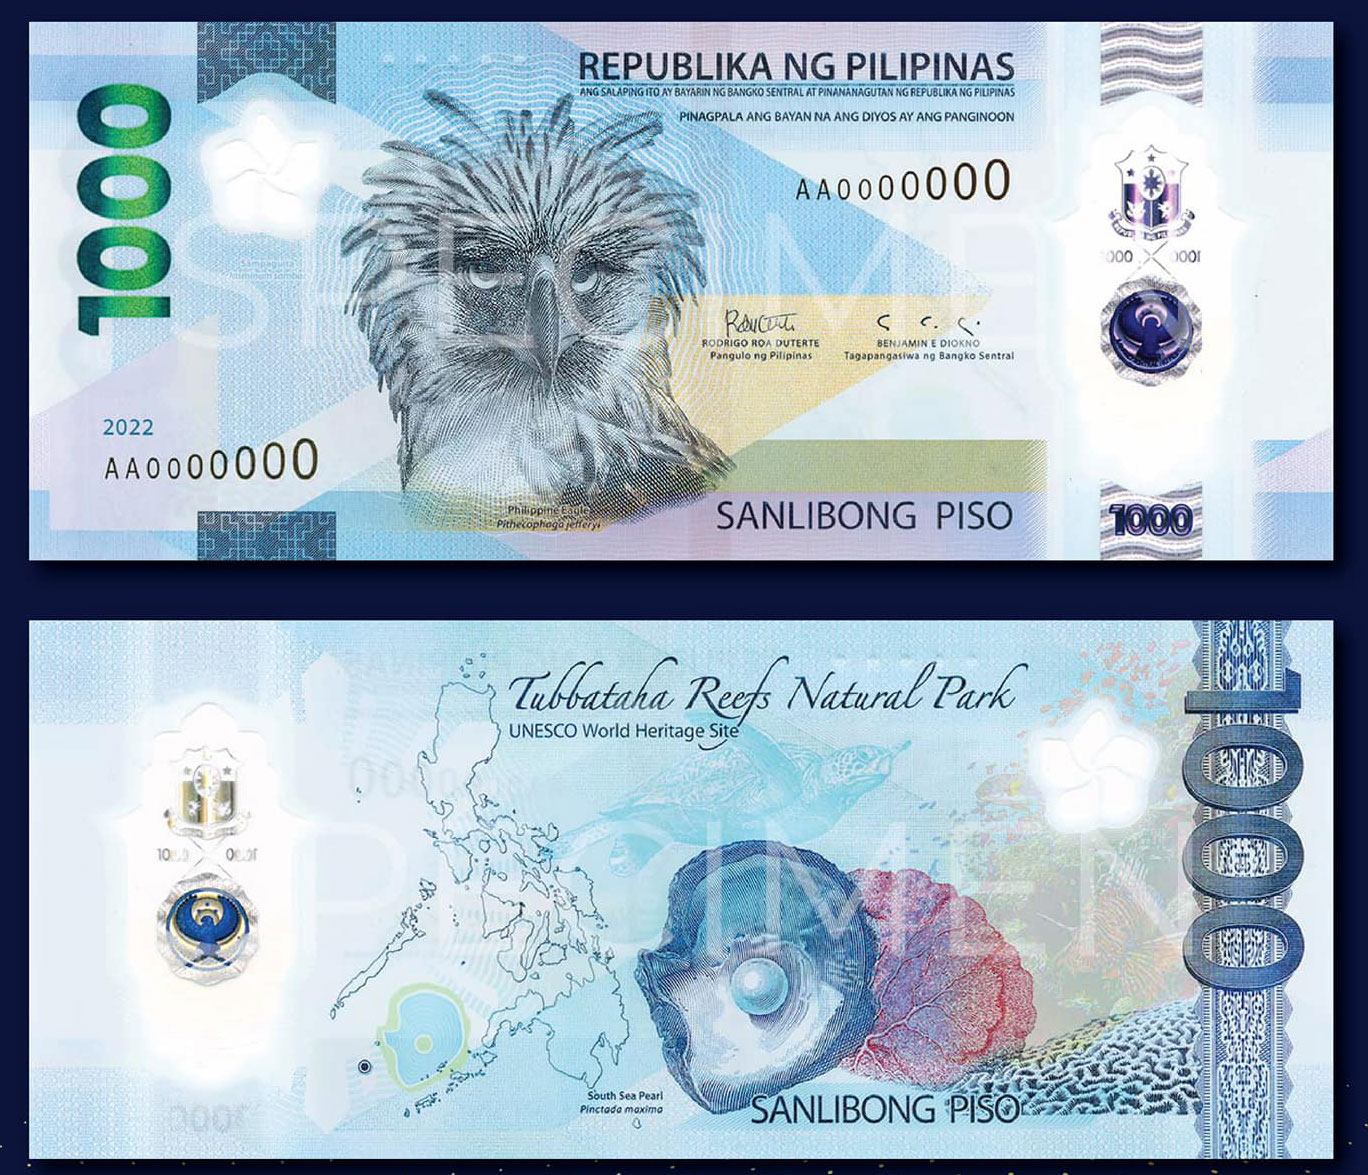 philippine-p1000-banknotes-now-dirtproof-waterproof-camella-homes